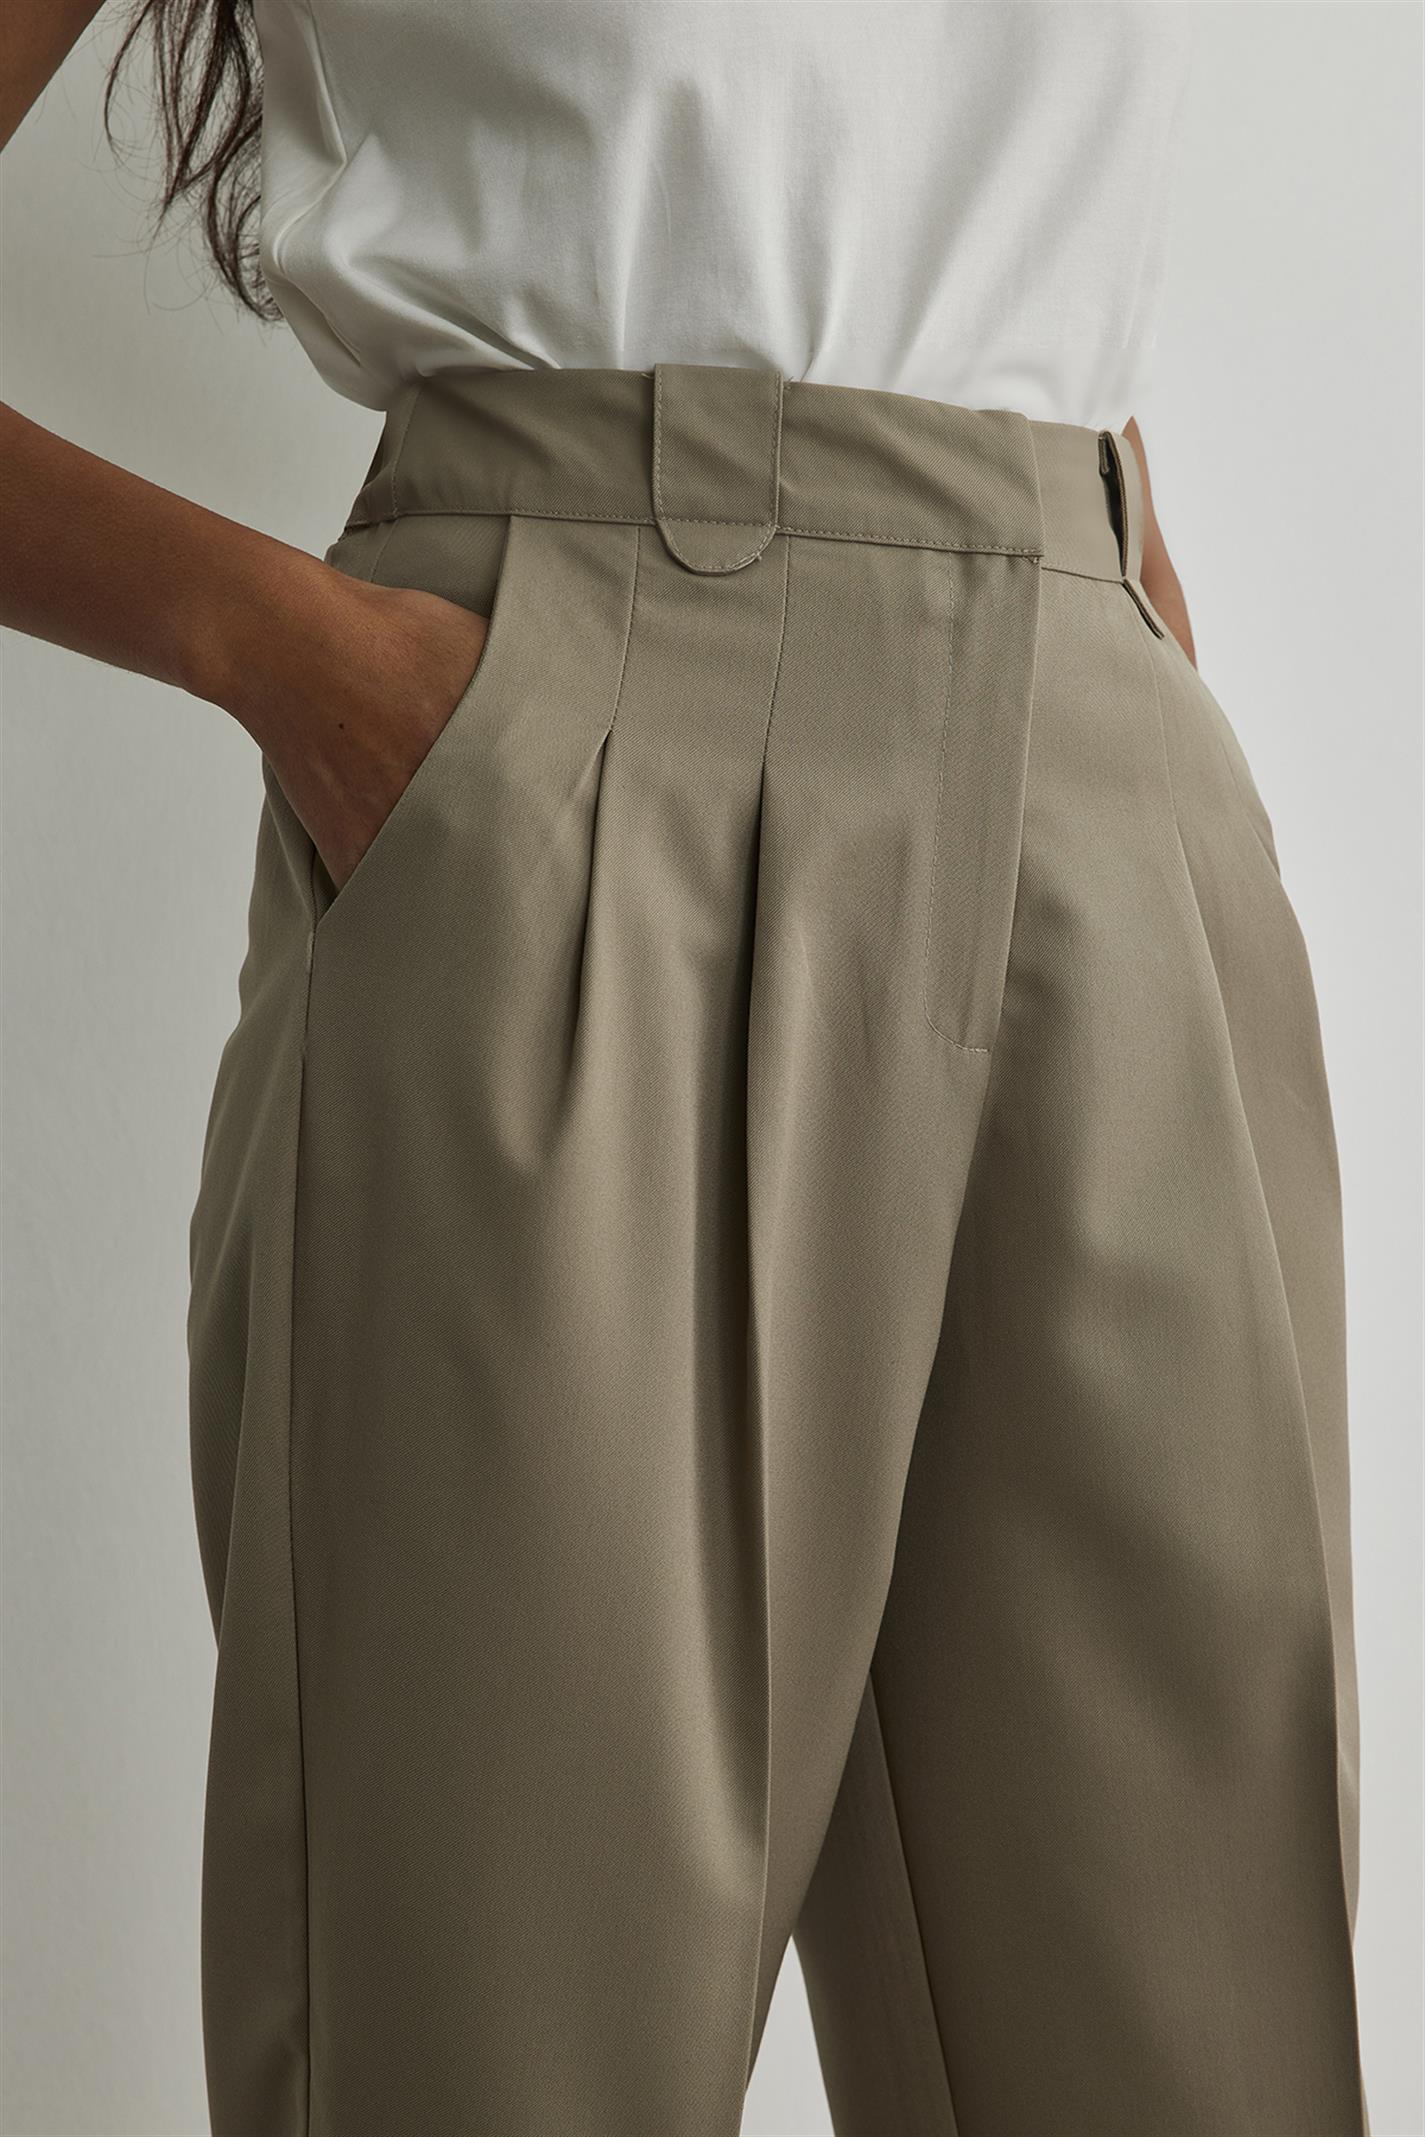 Açık Haki Binici Pantolon | Suud Collection